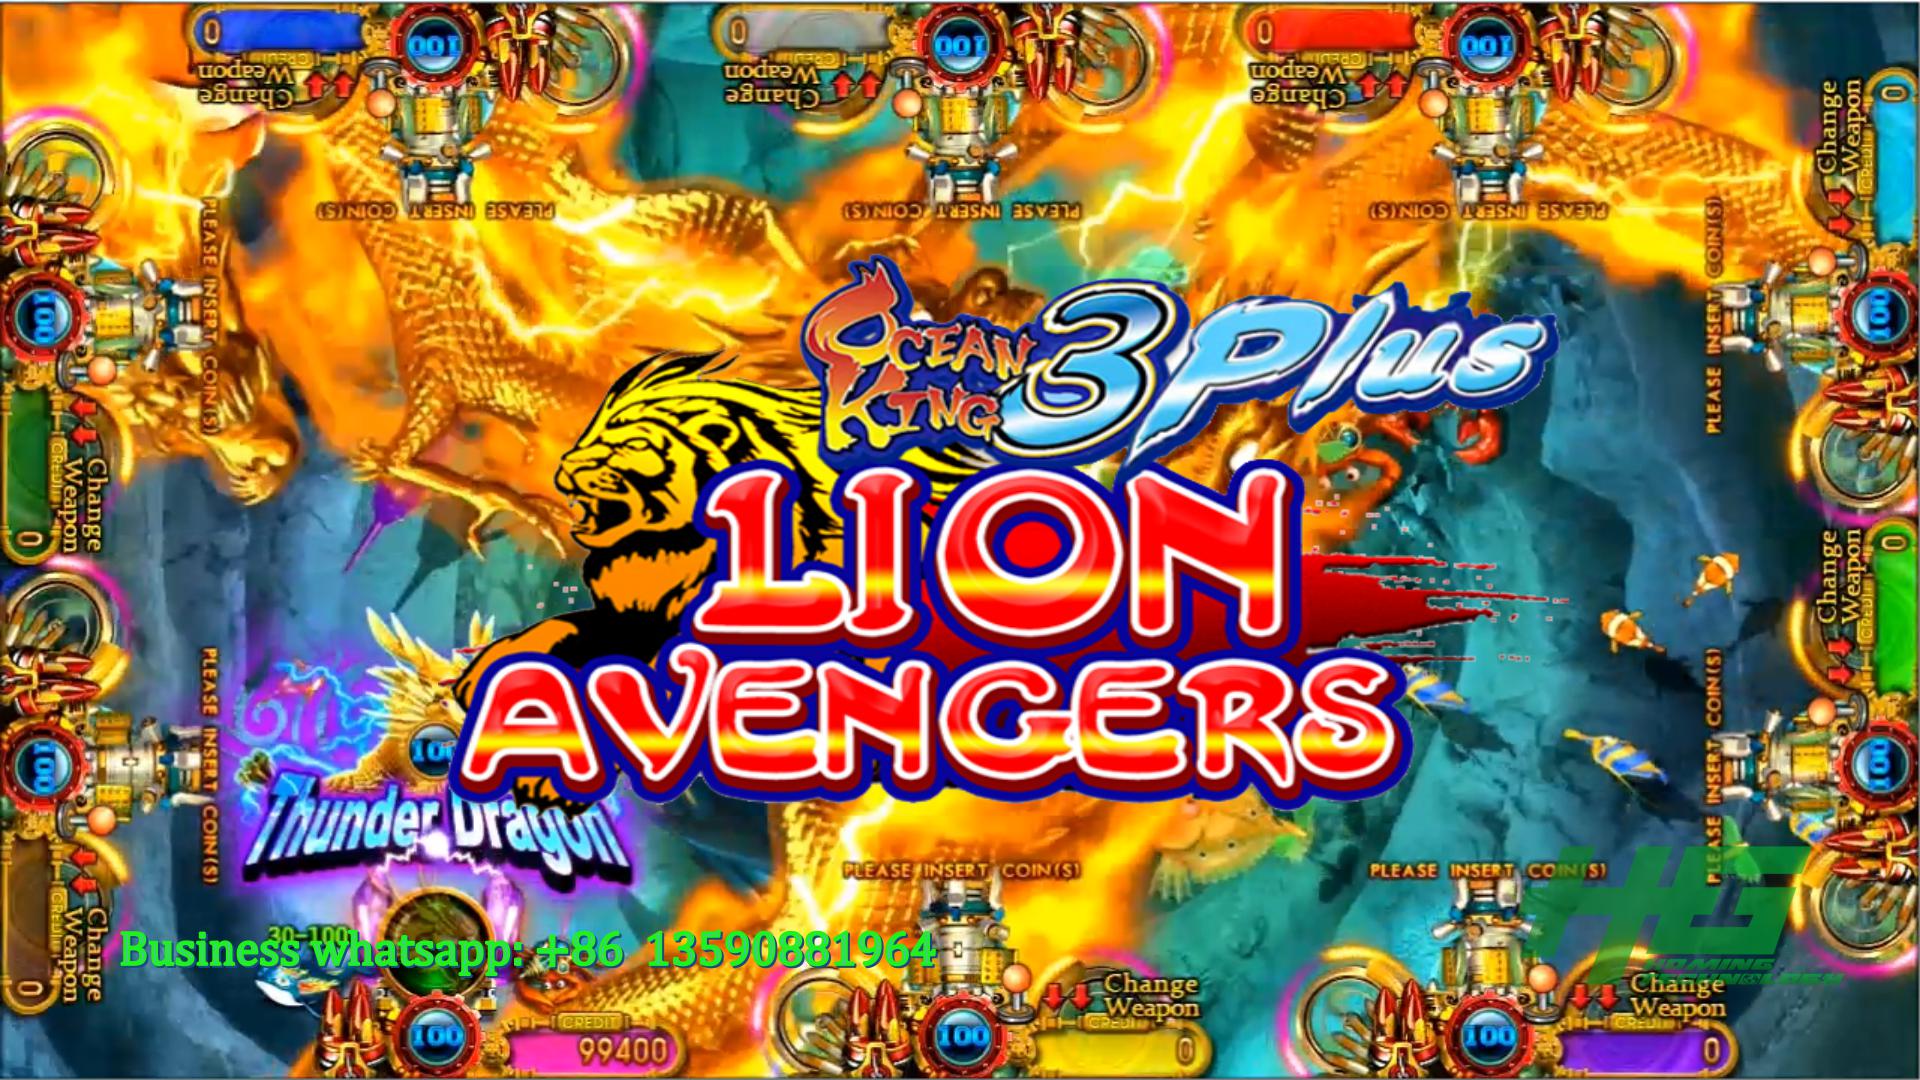 IGS Original Ocean King 3 Plus Lion Avengers,Ocean King 3 Plus Fish Casino Game Machine For Sale 